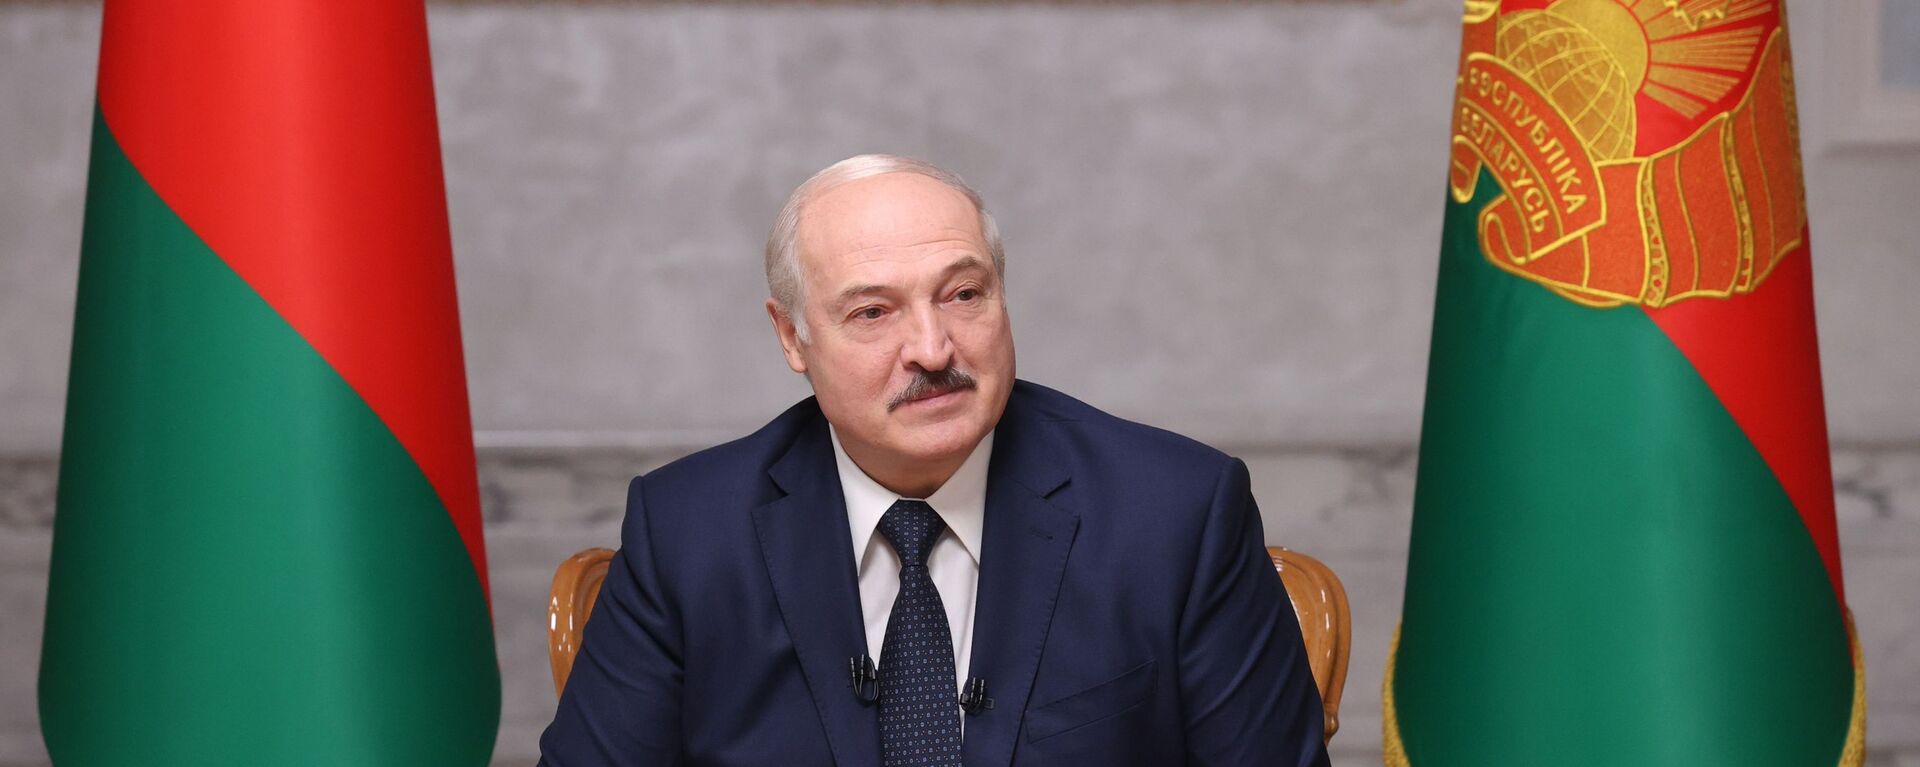 Presidente belarusso Aleksandr Lukashenko durante uma entrevista a jornalistas russos em Minsk - Sputnik Brasil, 1920, 27.02.2022